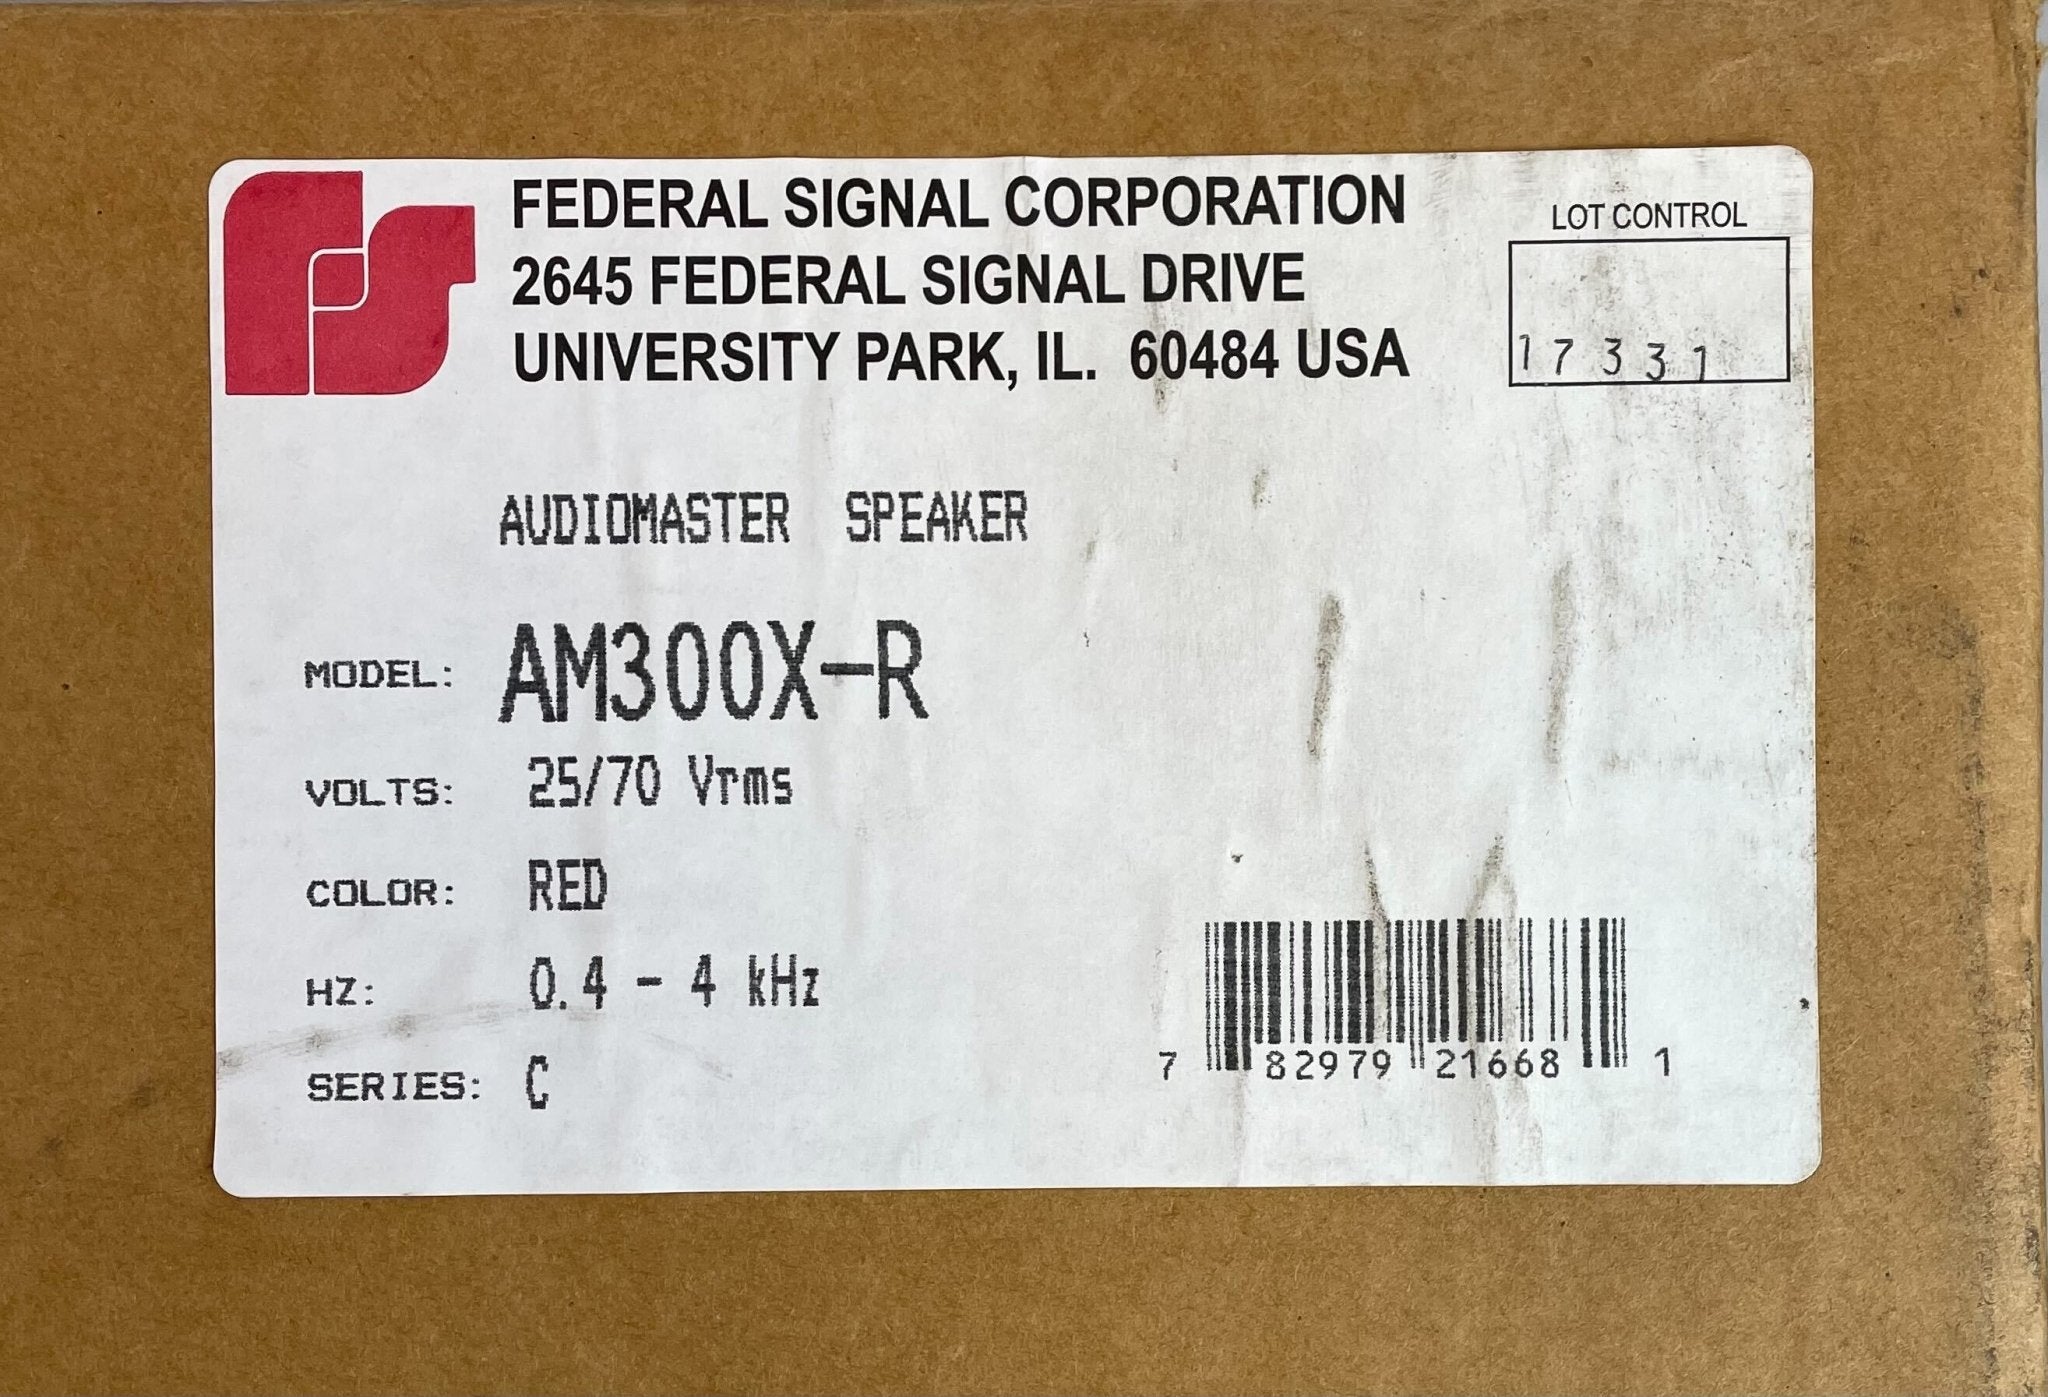 Federal Signal AM300X-R - The Fire Alarm Supplier